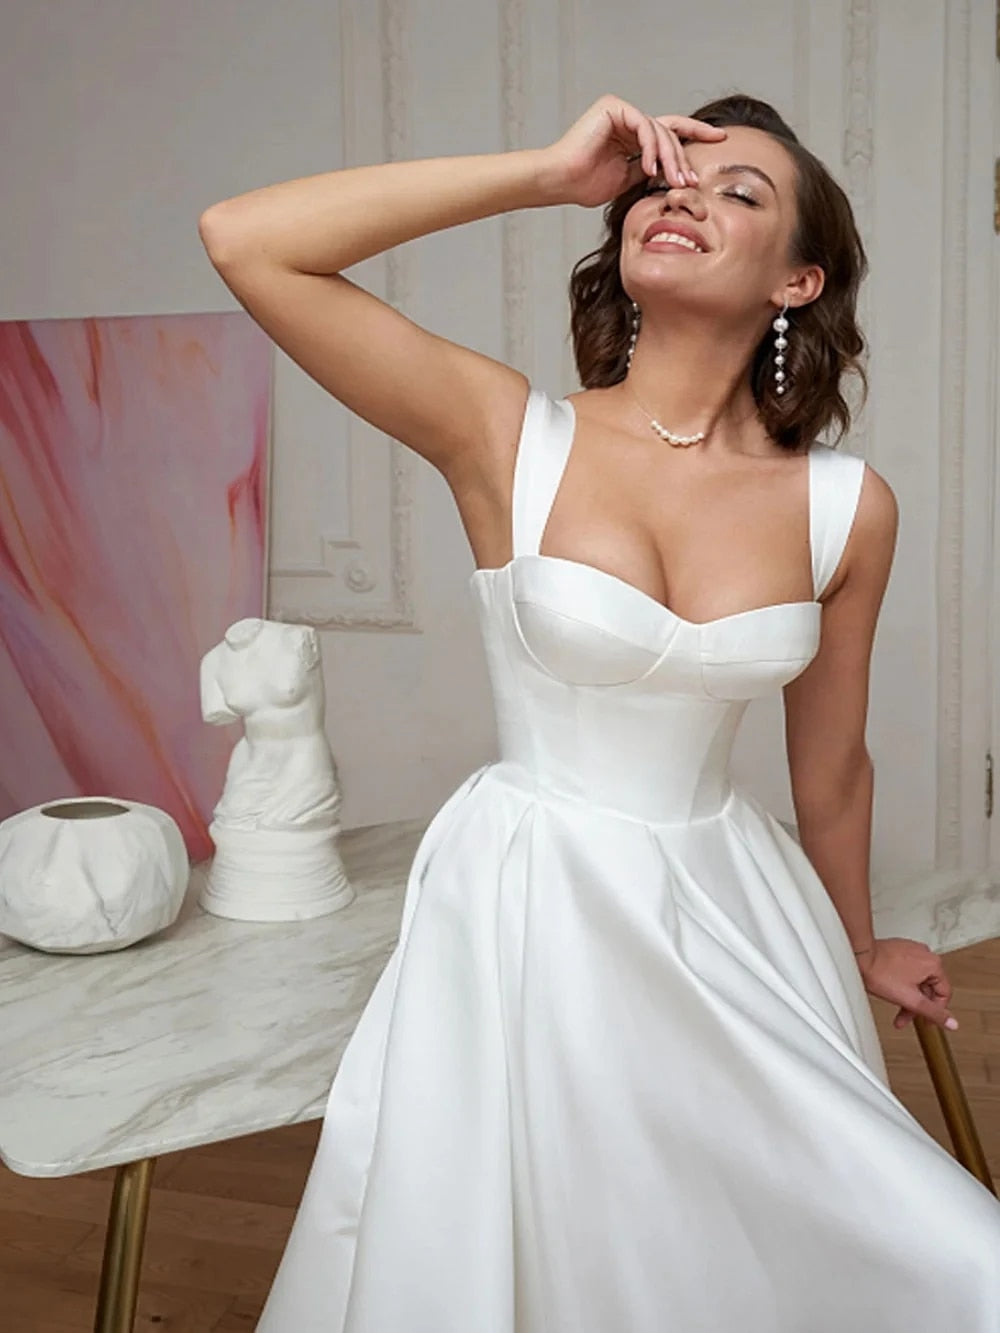 Lizakosht Short Wedding Dress Sexy Sweetheart Sleeveless Simple Bridal Gowns Modern Mid-Calf Satin Bride Dresses Backless